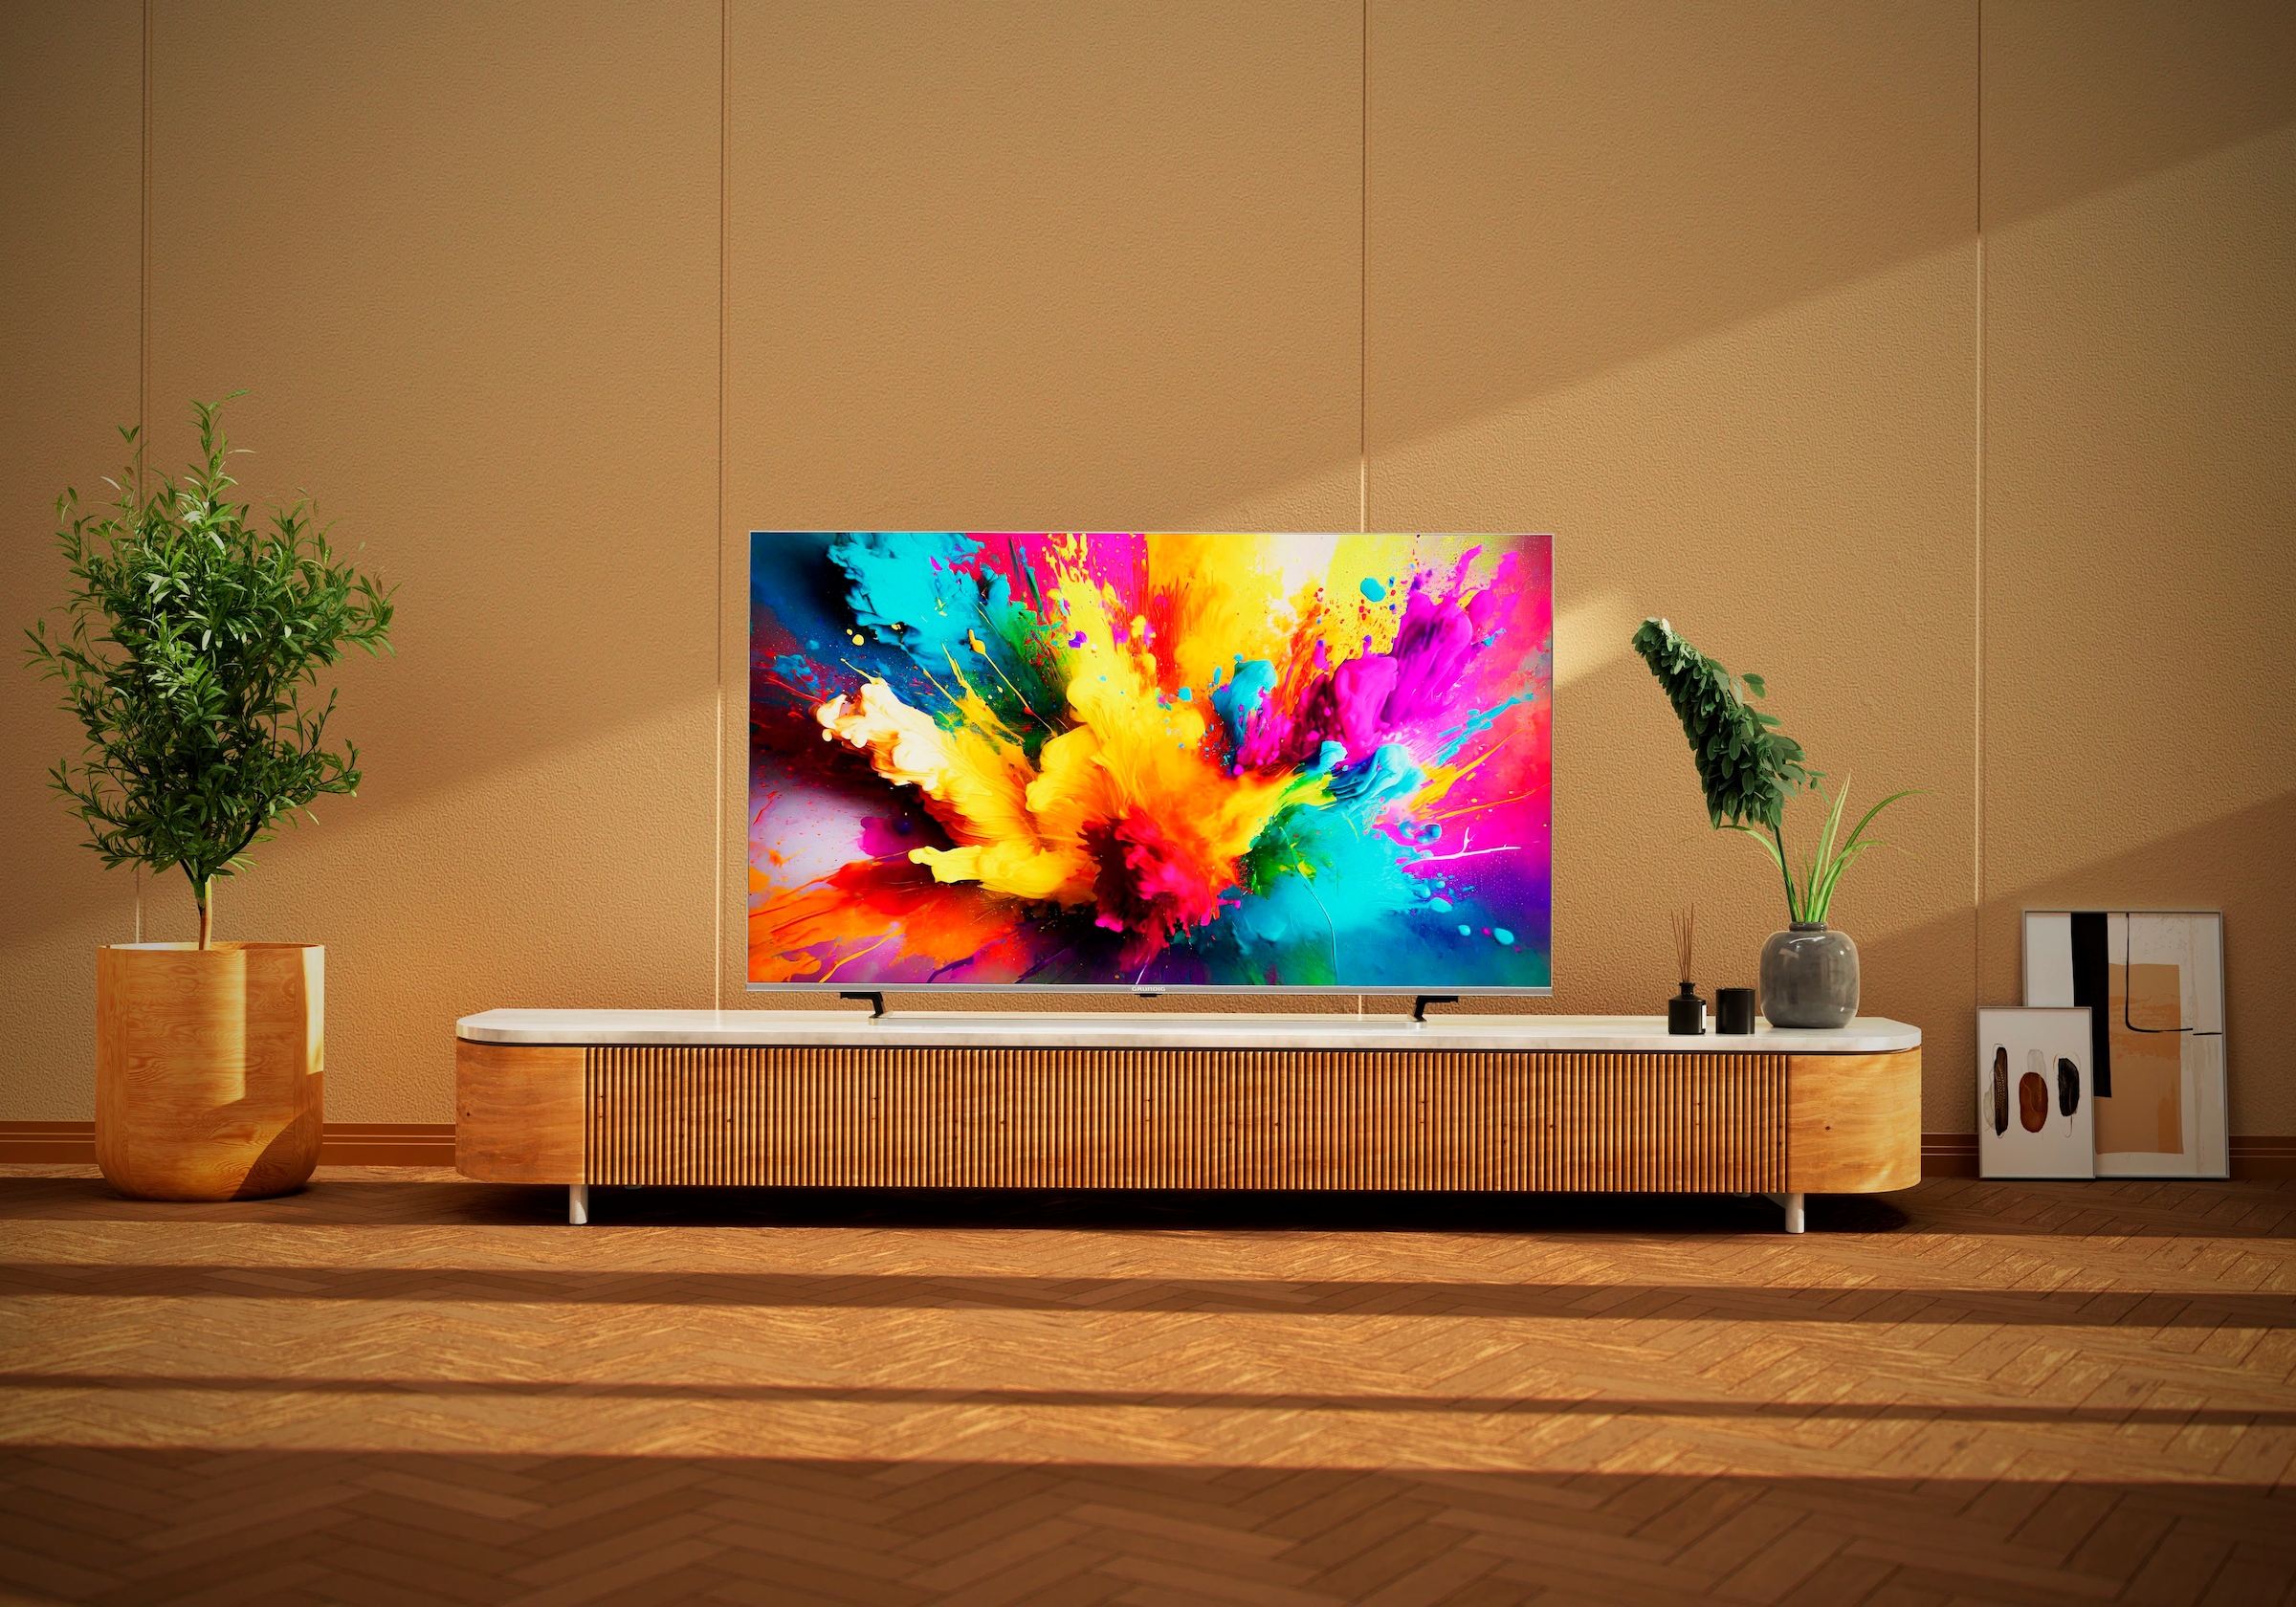 Grundig LED-Fernseher »65 VOE 83 CV3T00«, 164 cm/65 Zoll, 4K Ultra HD, Google TV-Smart-TV